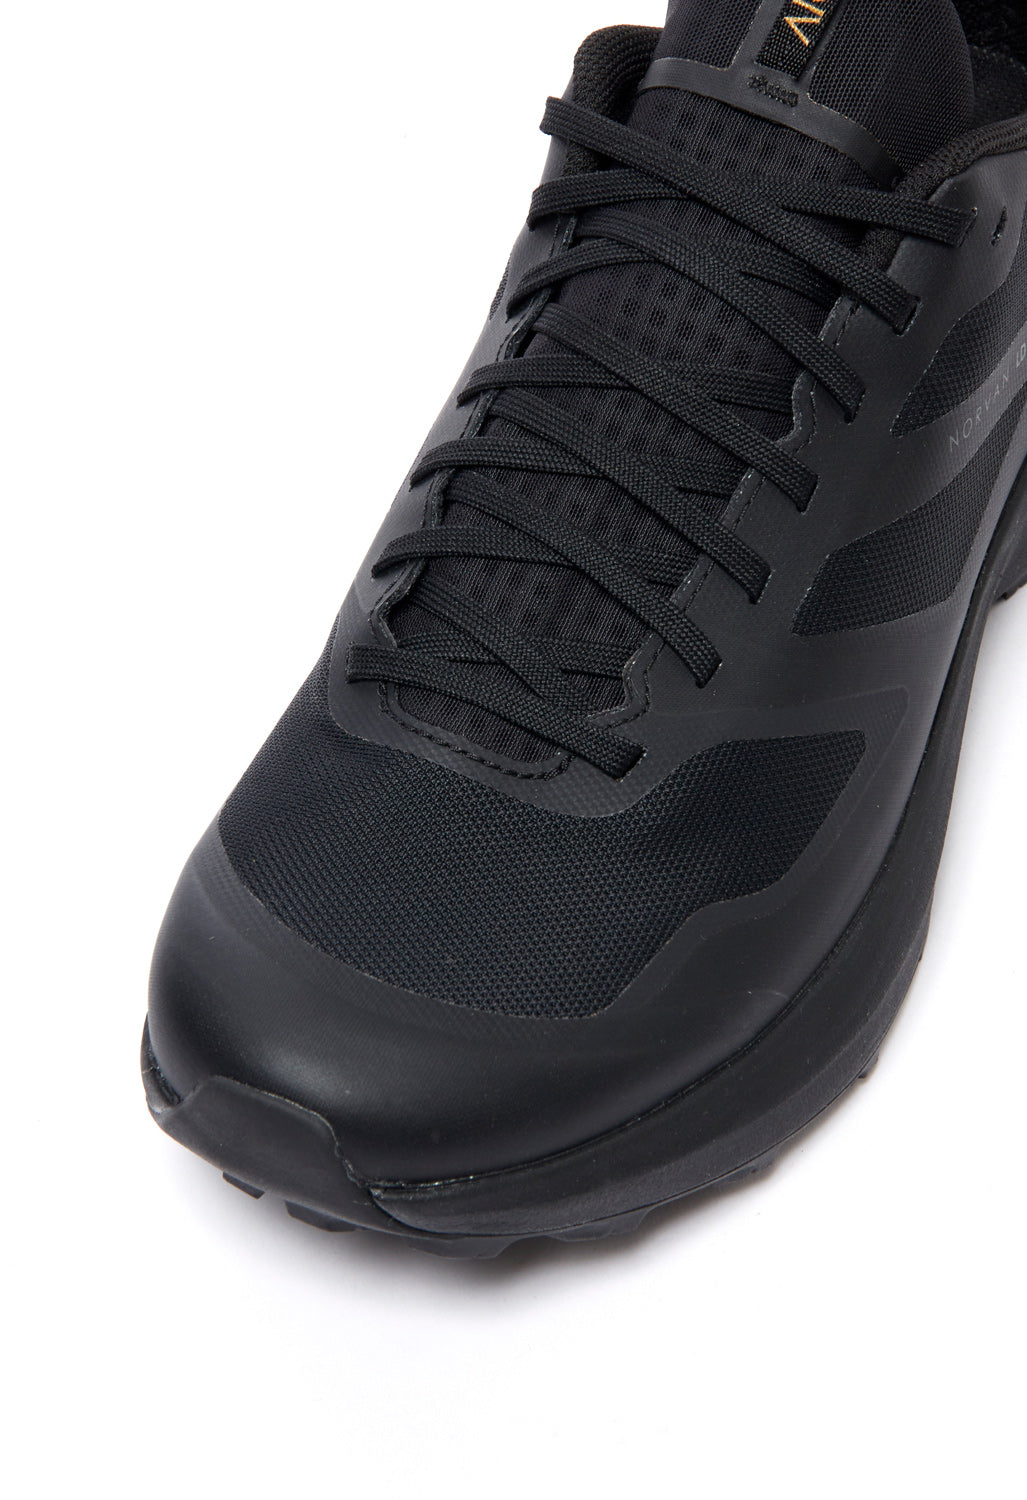 Arc'teryx Norvan LD 3 GORE-TEX Men's Shoes - Black/Black